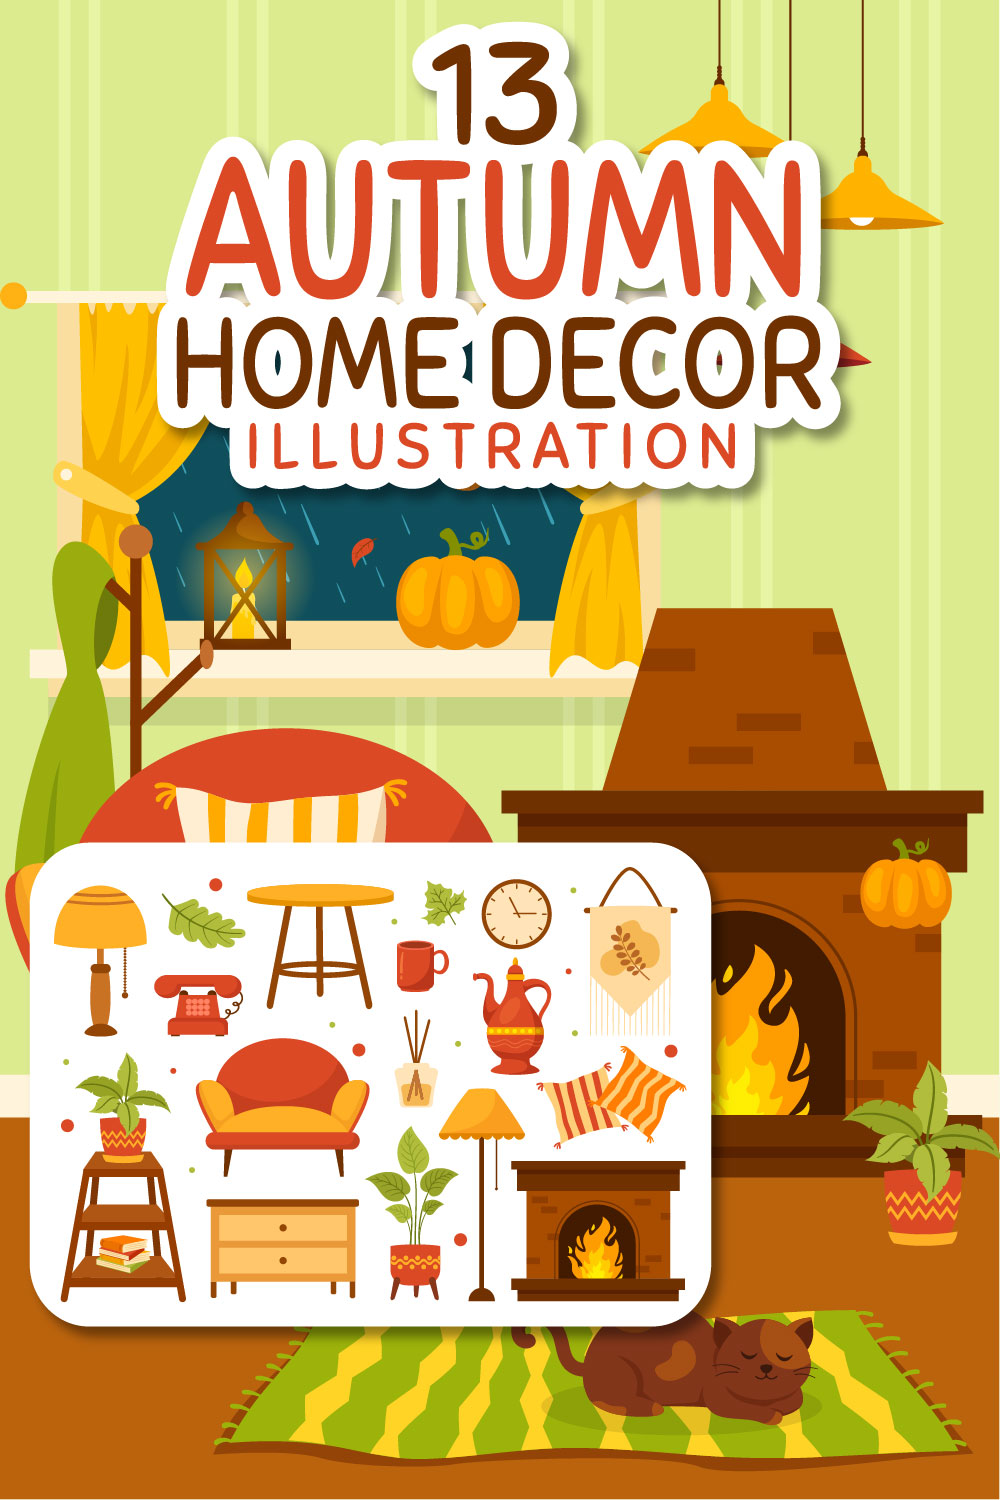 13 Autumn Home Decor Illustration pinterest preview image.